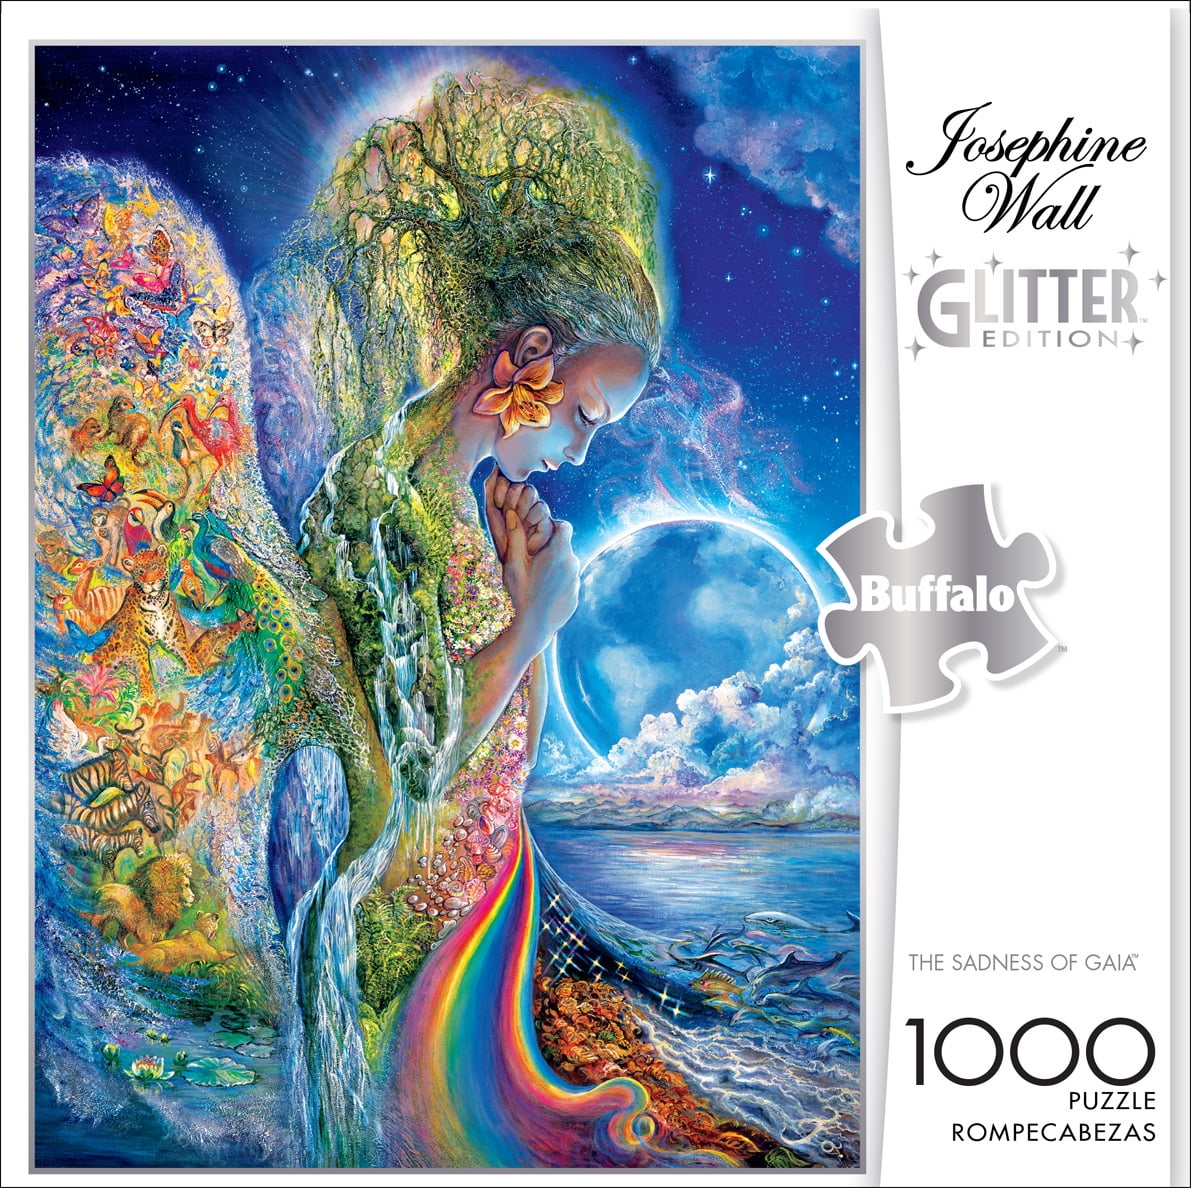 1000 Piece Puzzle Josephine Wall Glitter Edition Voyage to Murrlis Sea Jigsaw 